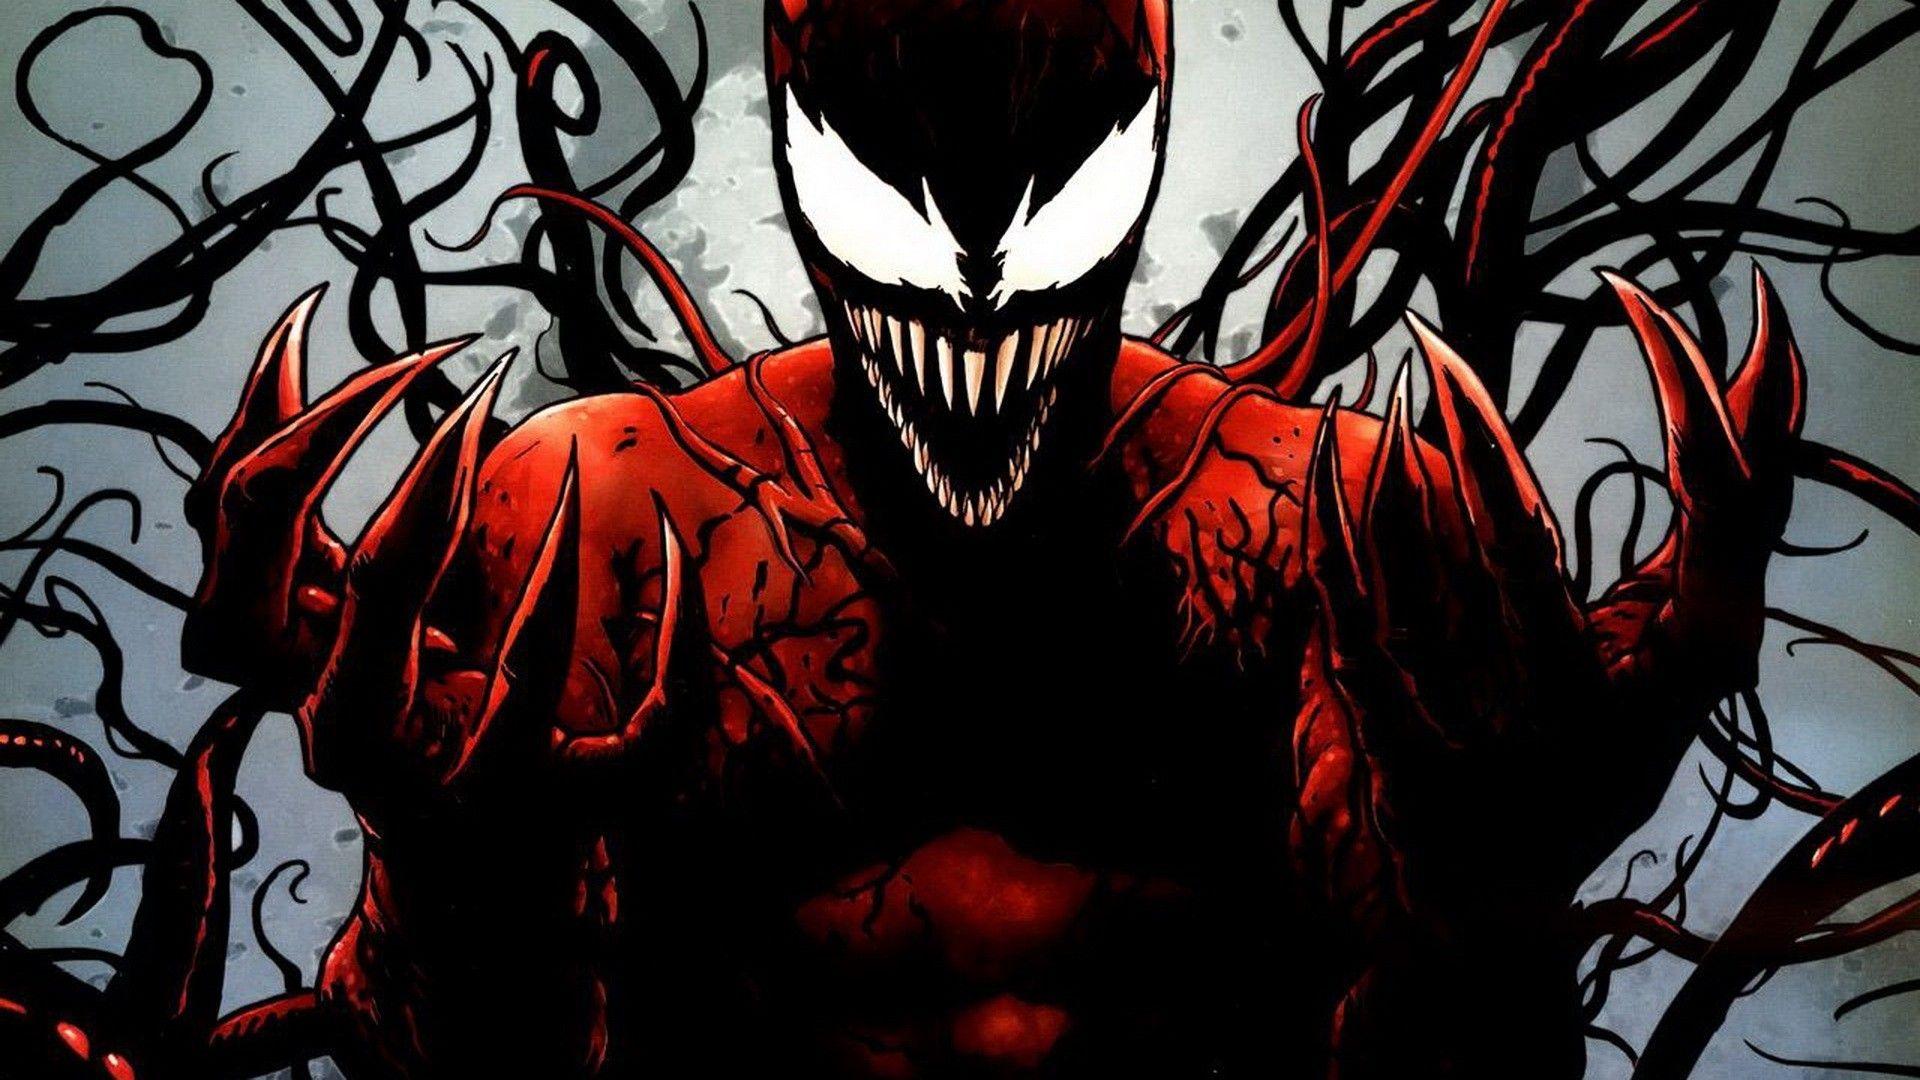 Spiderman Vs Venom Vs Carnage Wallpaperwalpaperlist.com